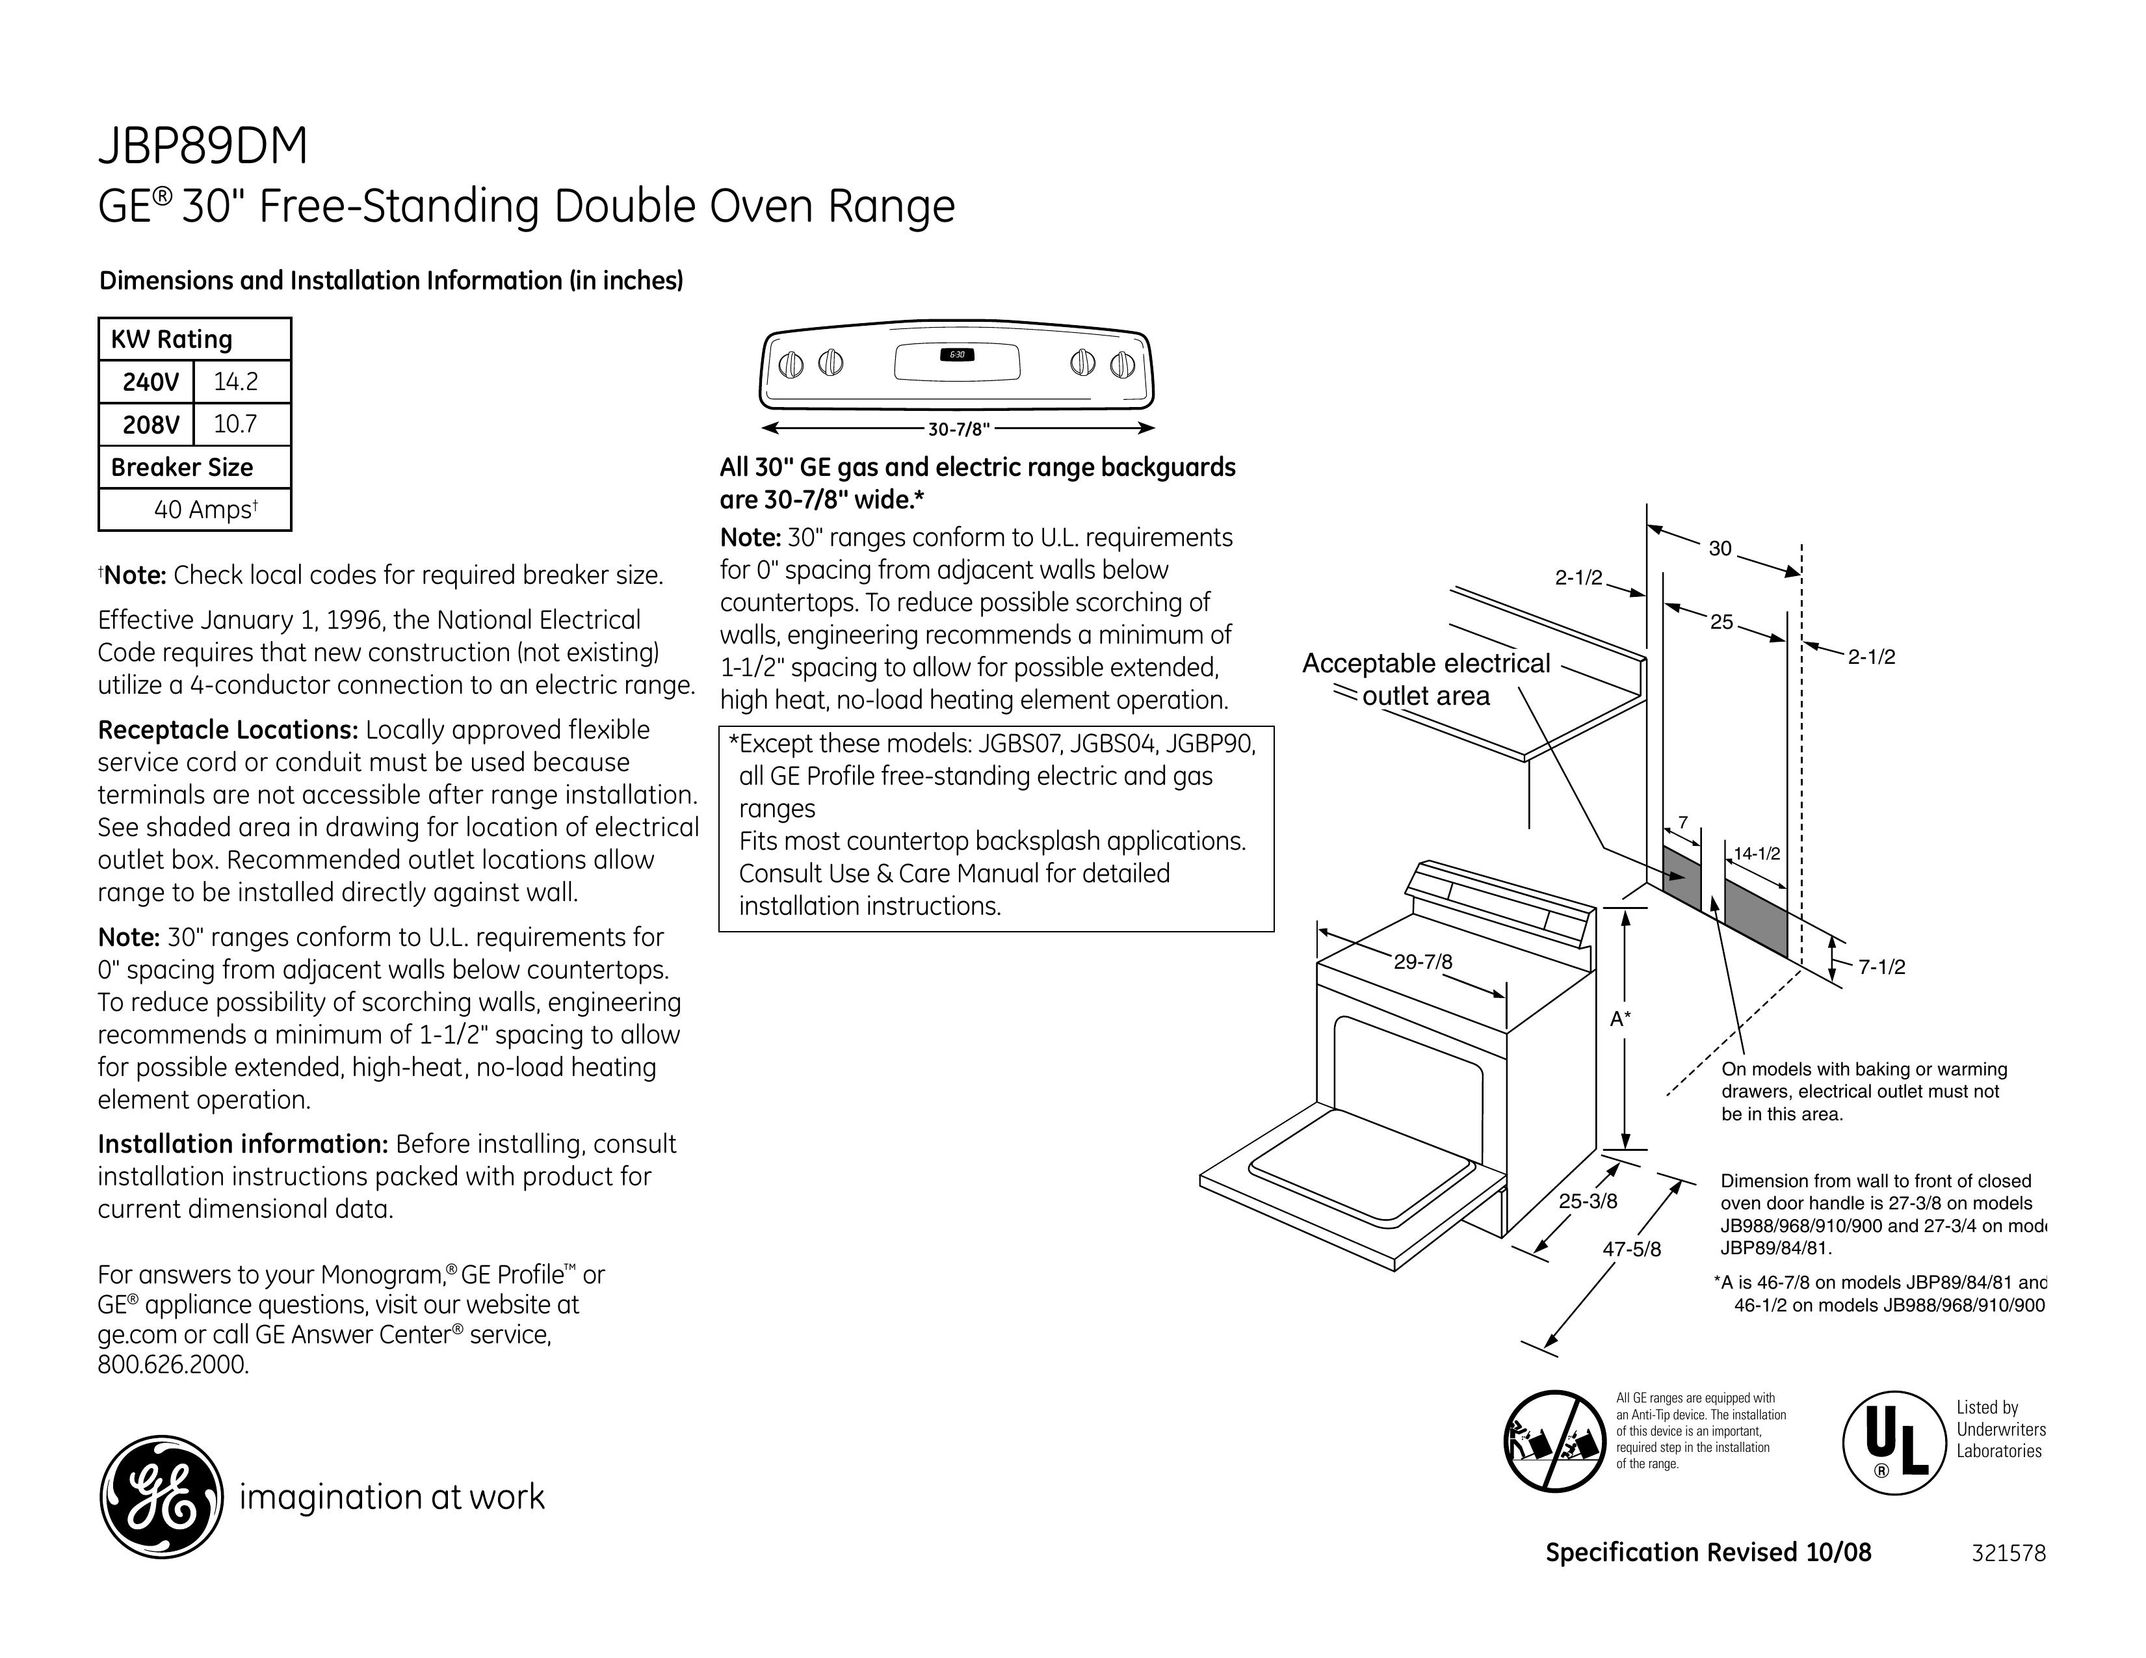 GE JBP89DM Double Oven User Manual